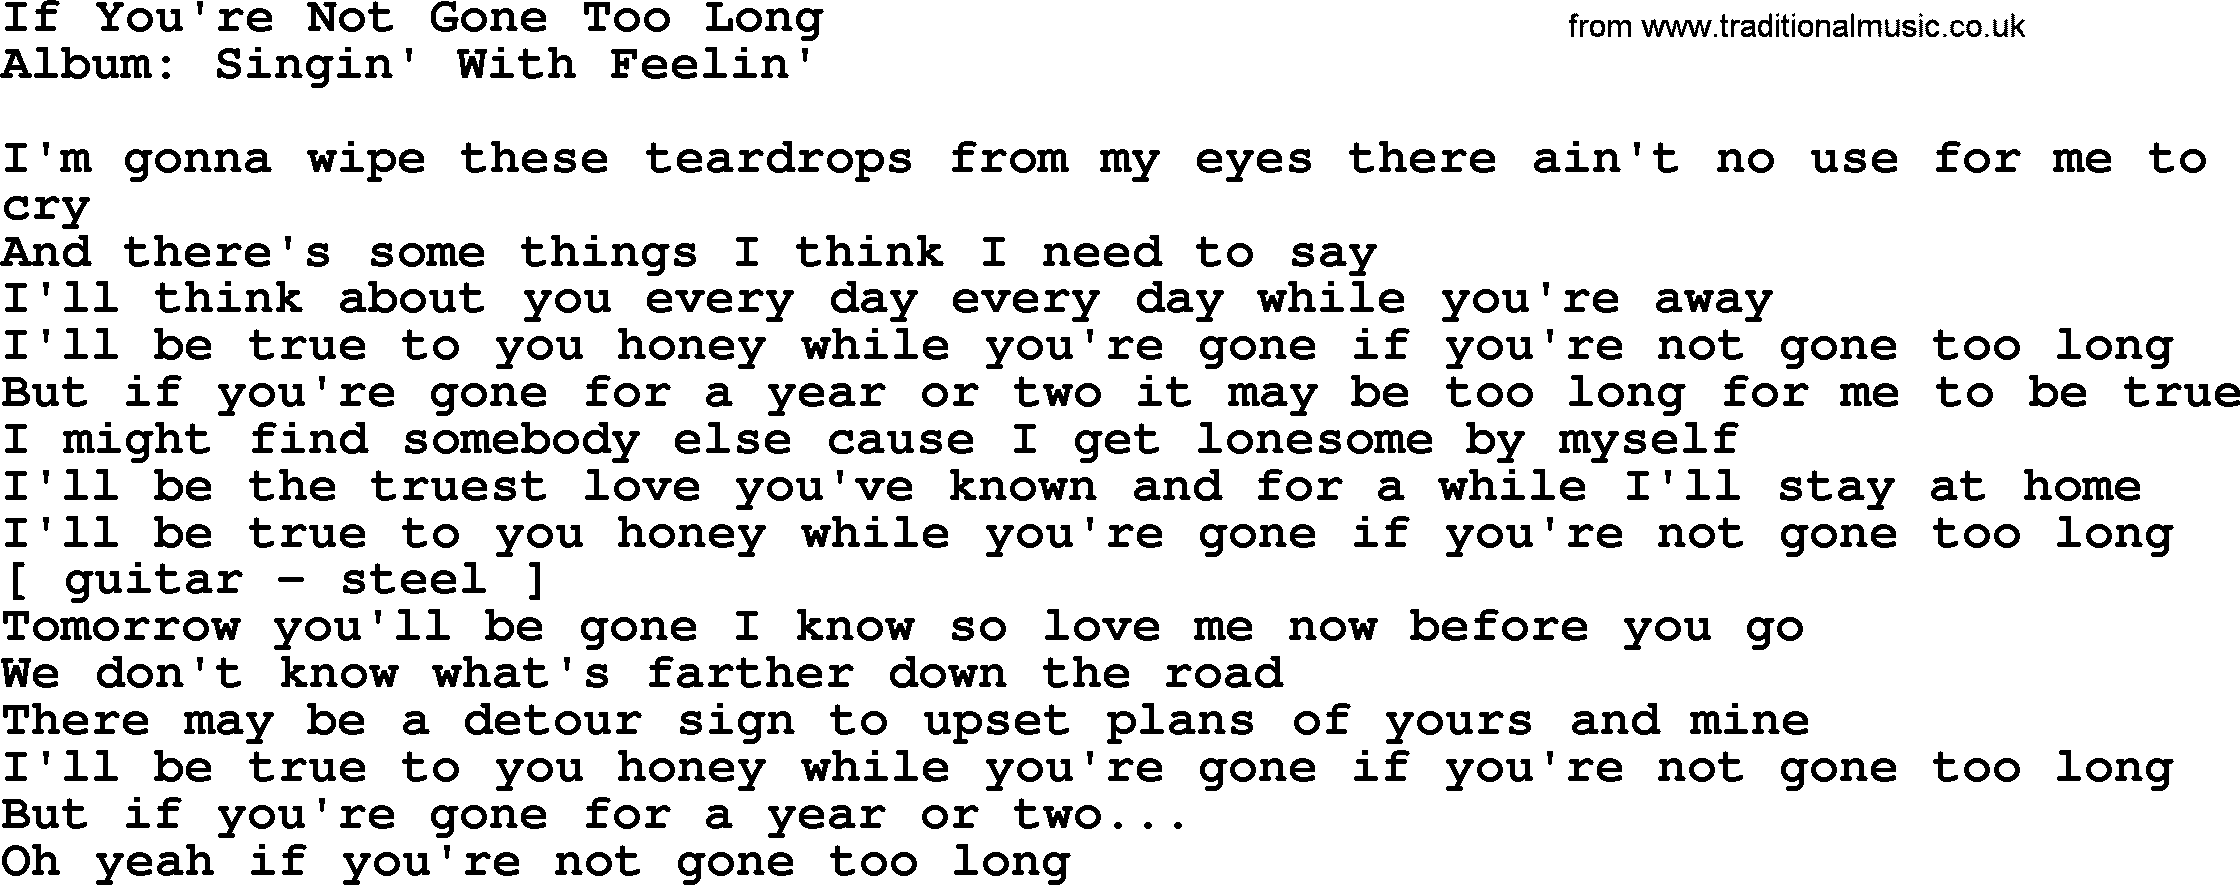 Loretta Lynn song: If You're Not Gone Too Long lyrics